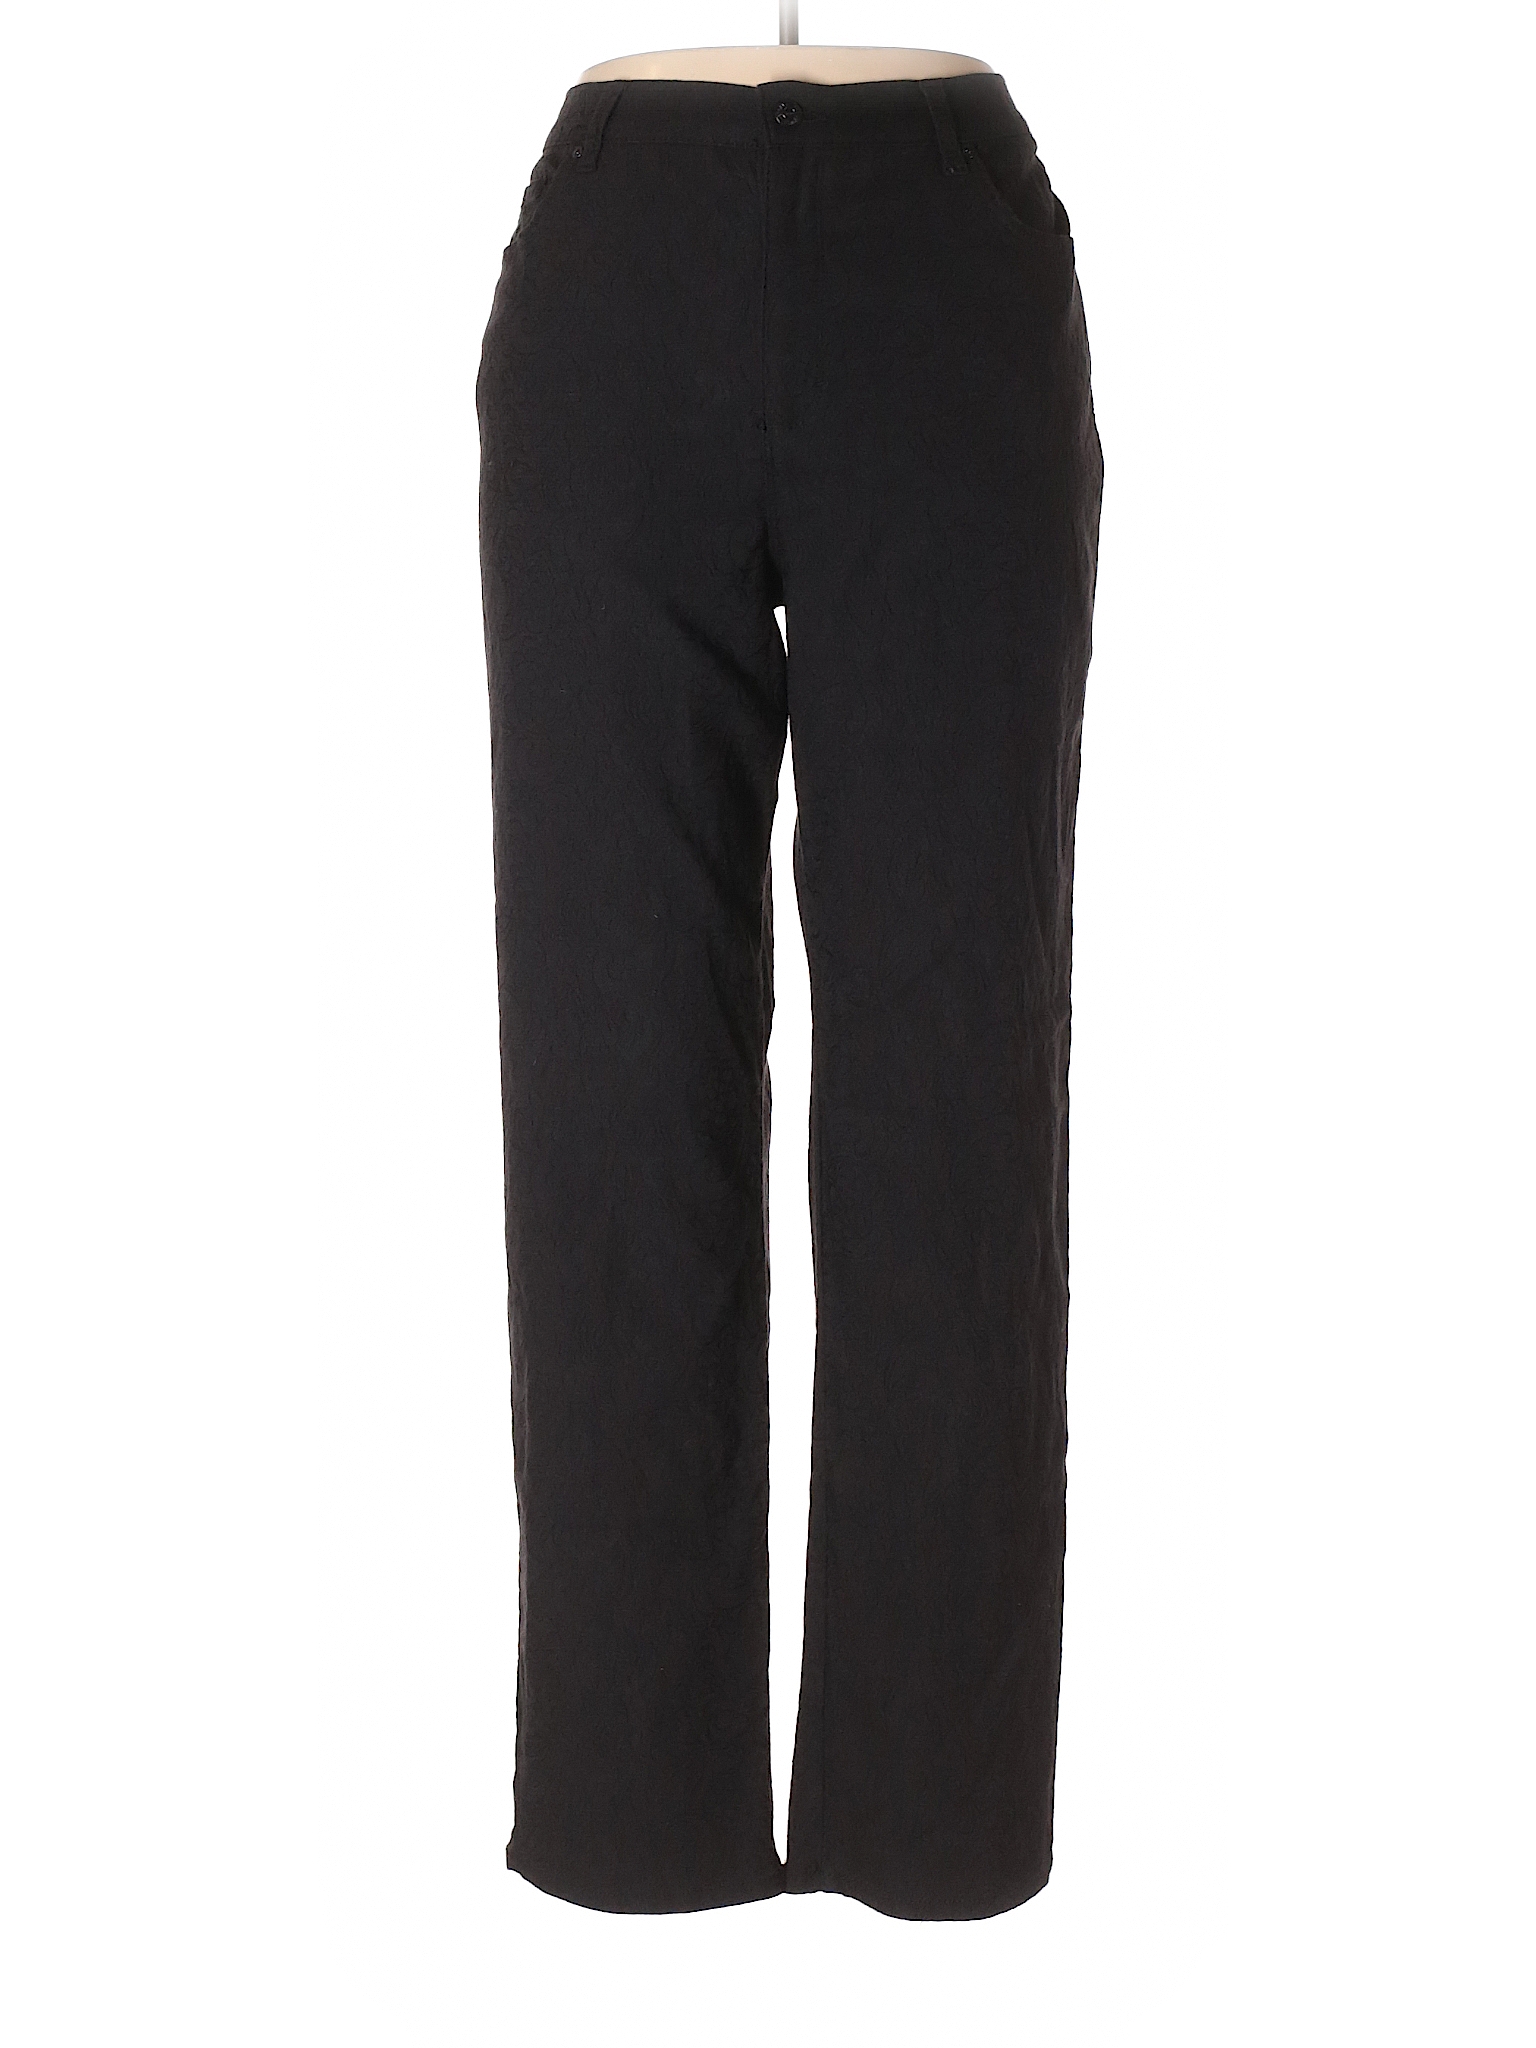 Gloria Vanderbilt Solid Black Dress Pants Size 16 - 76% off | thredUP